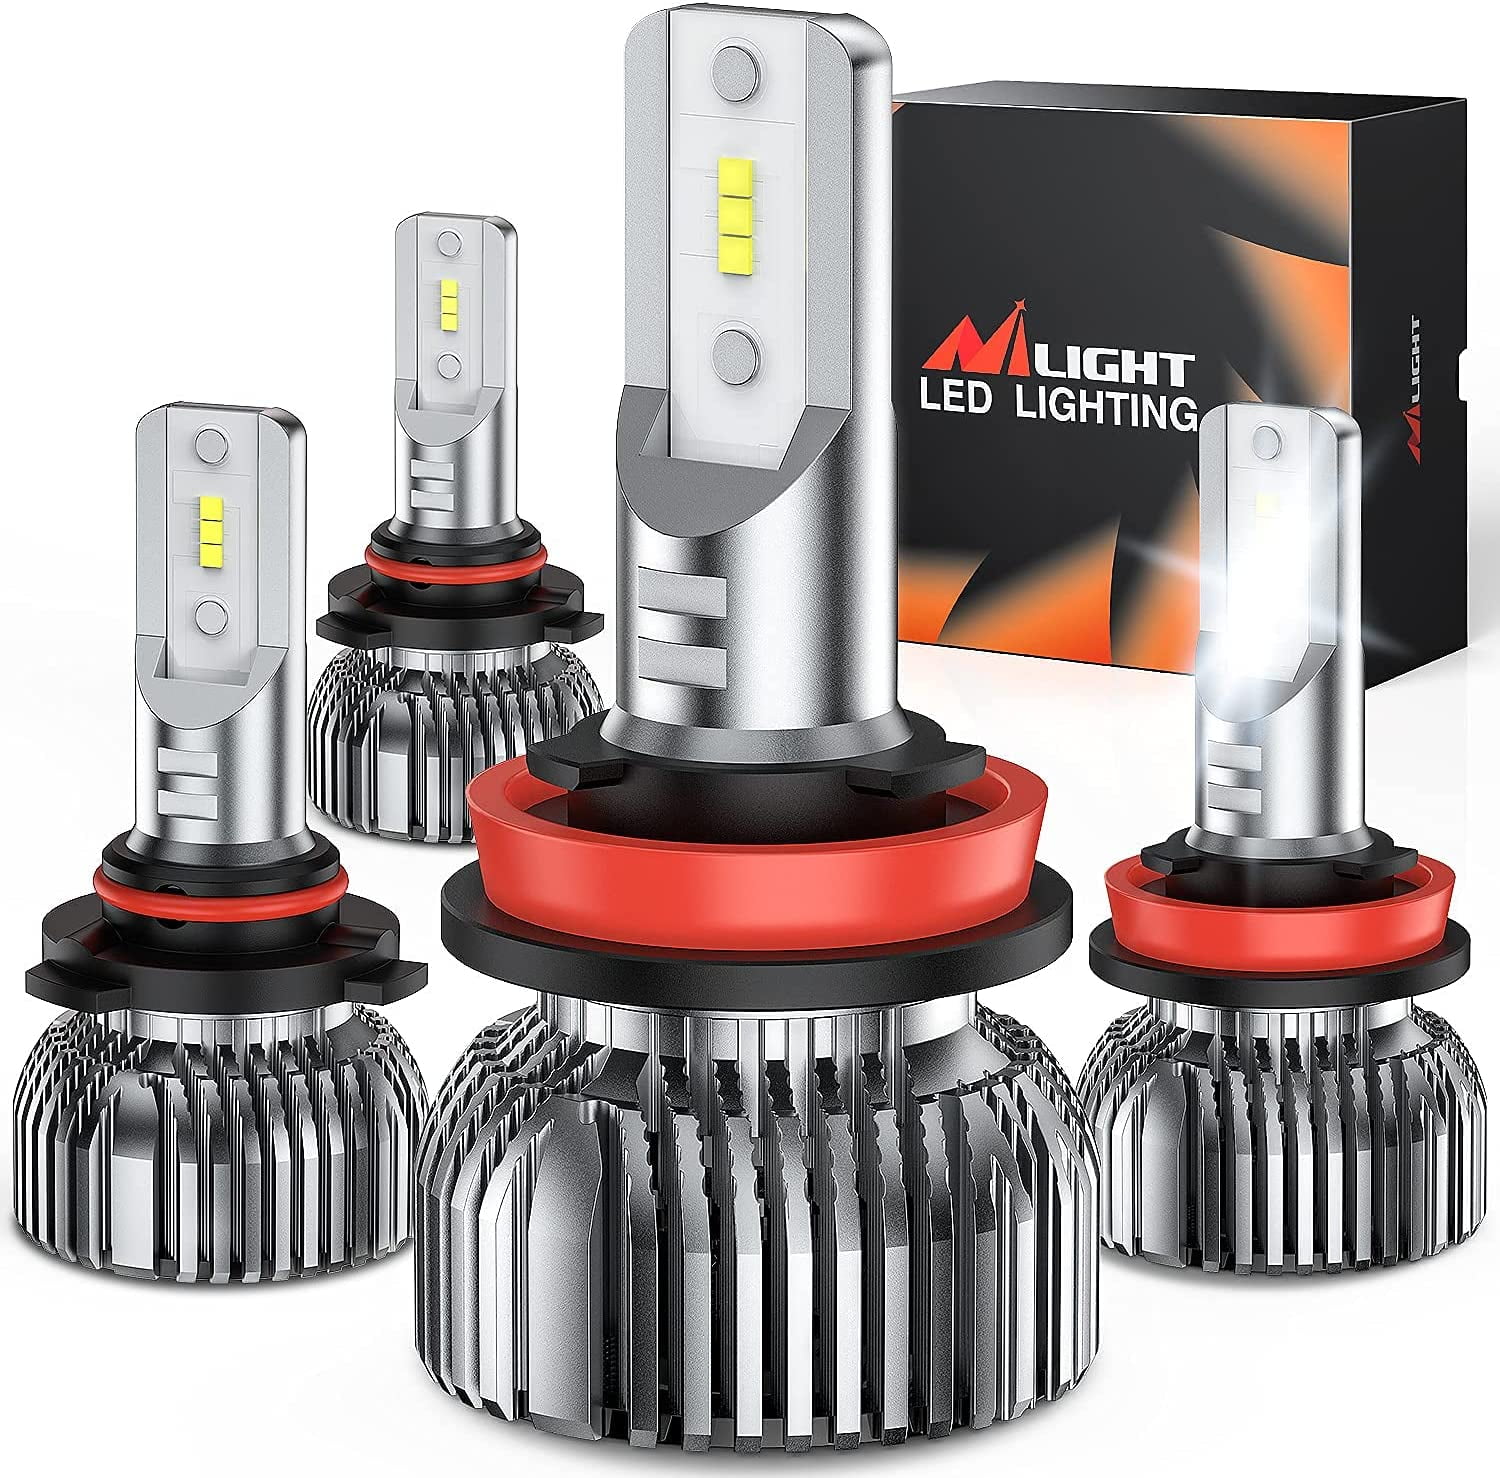 SEALIGHT 9005 LED Headlight Bulbs Mini Size 6000K 50W HB3 High Beam Fog Lights with Fan IP67 Waterproof